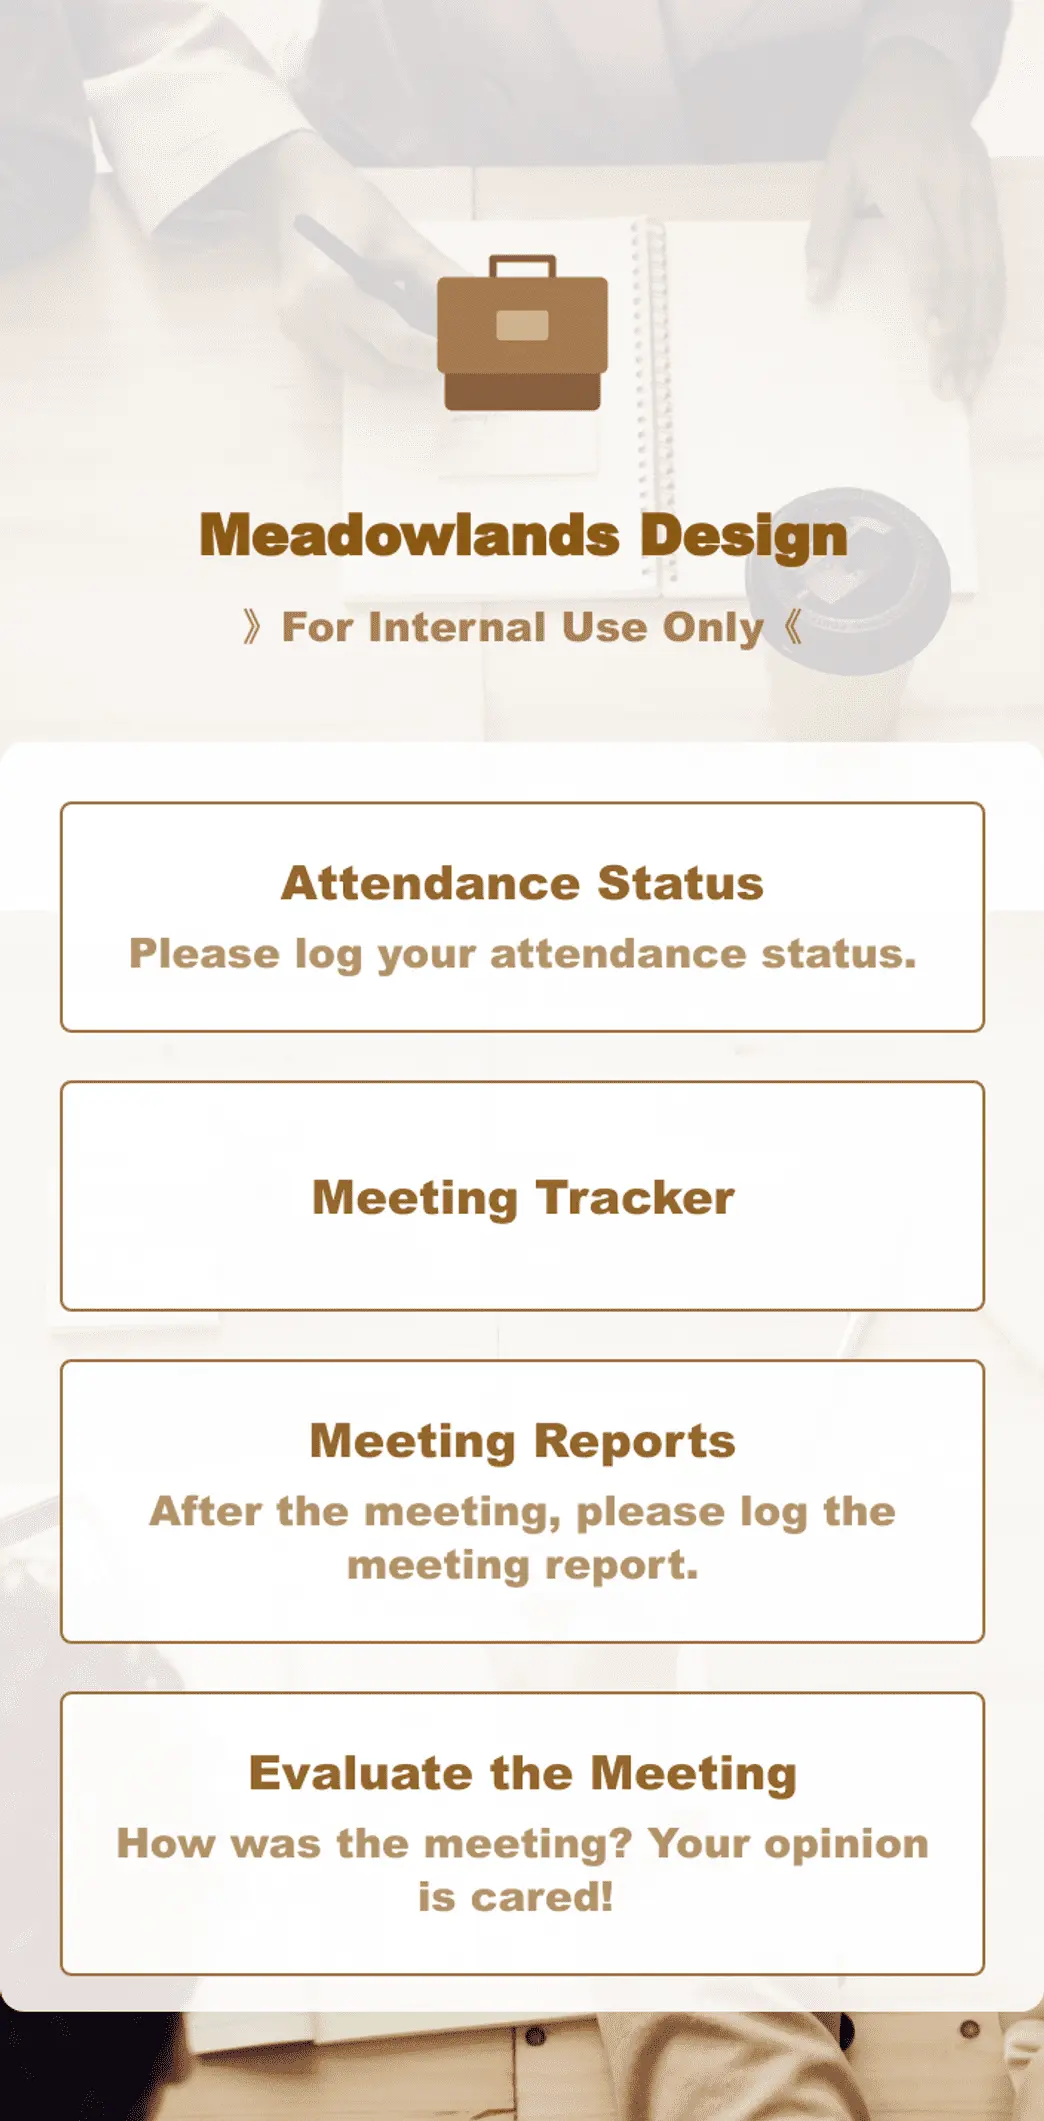 Meeting Management App